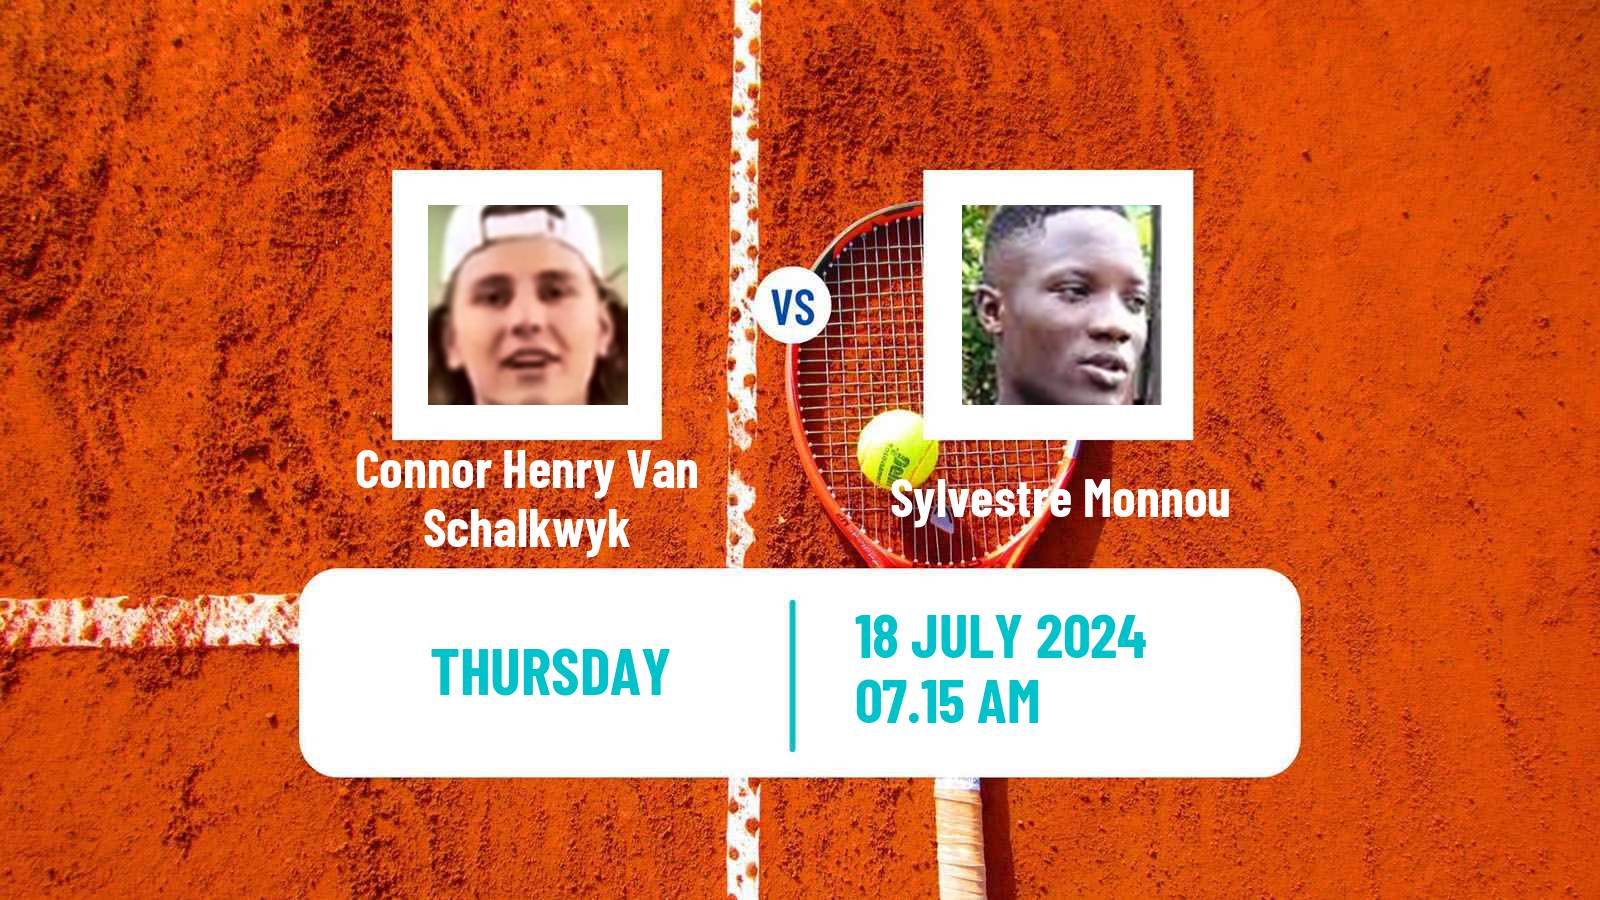 Tennis Davis Cup Group III Connor Henry Van Schalkwyk - Sylvestre Monnou